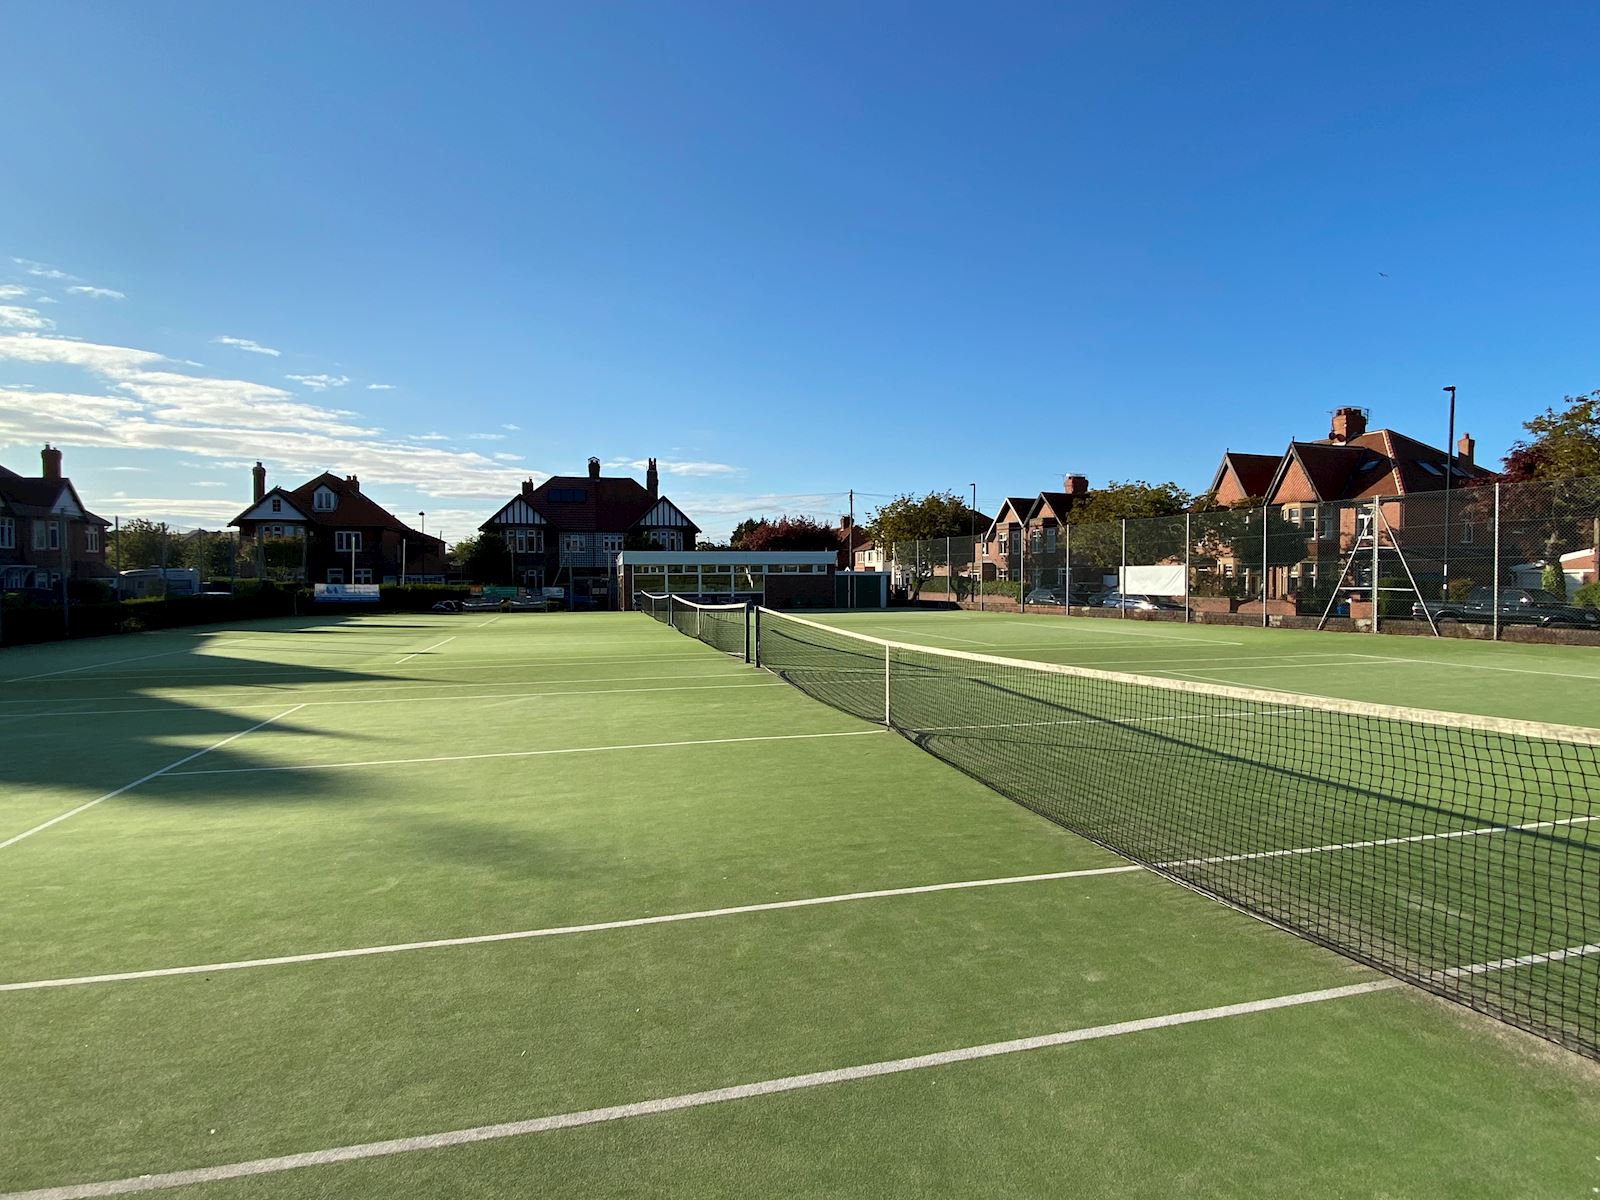 Beverley Park Lawn Tennis Club